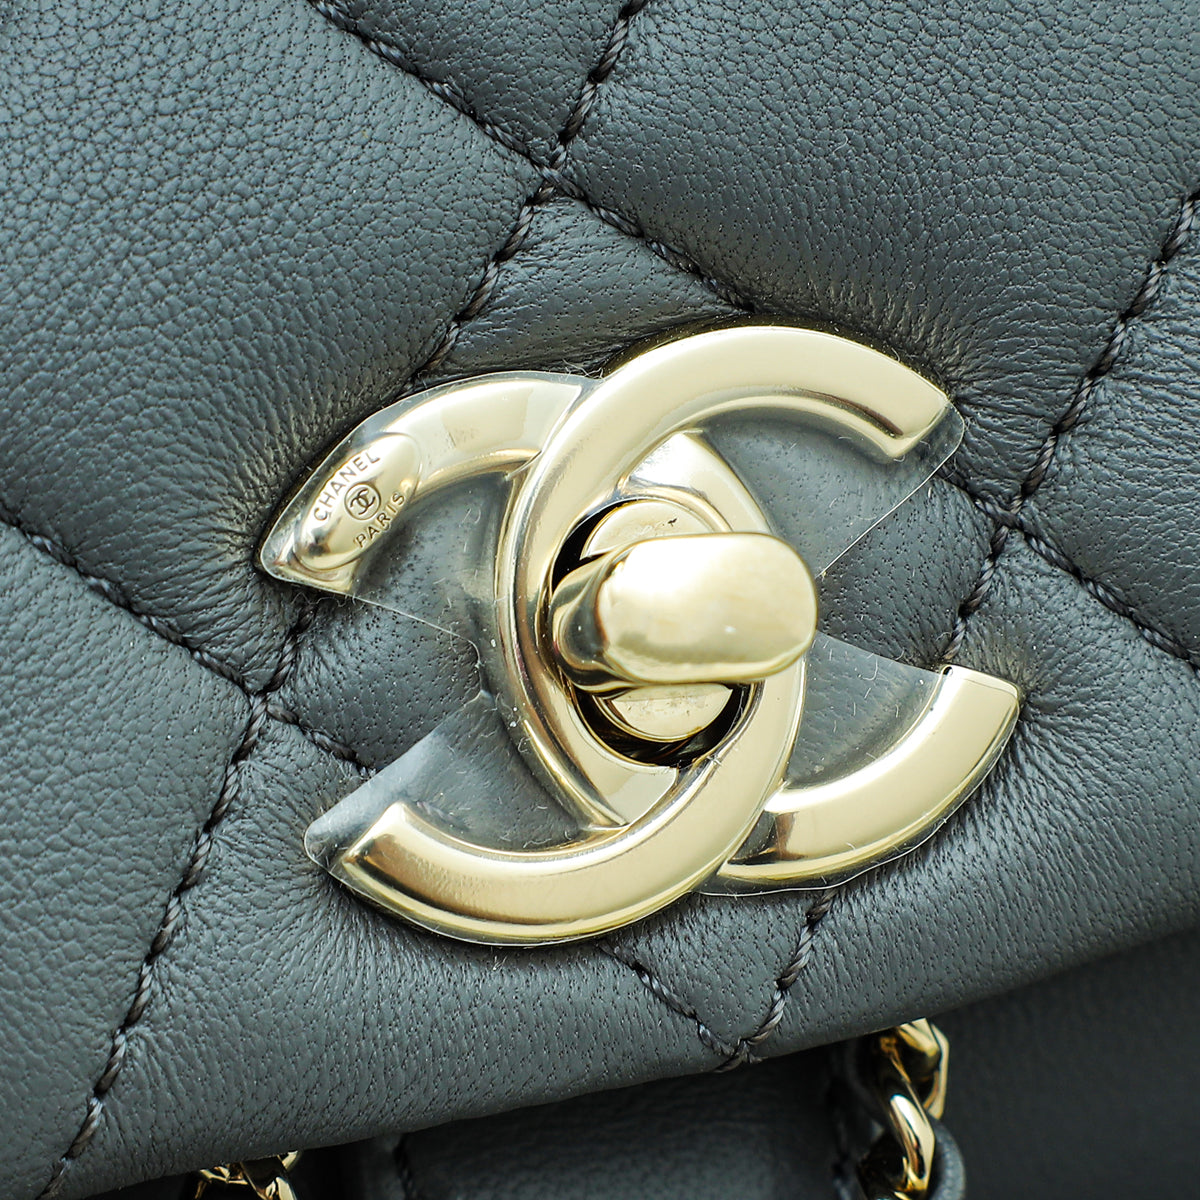 Chanel 23C Mini Duma Backpack Calfskin Light Grey LGHW (Microchip)